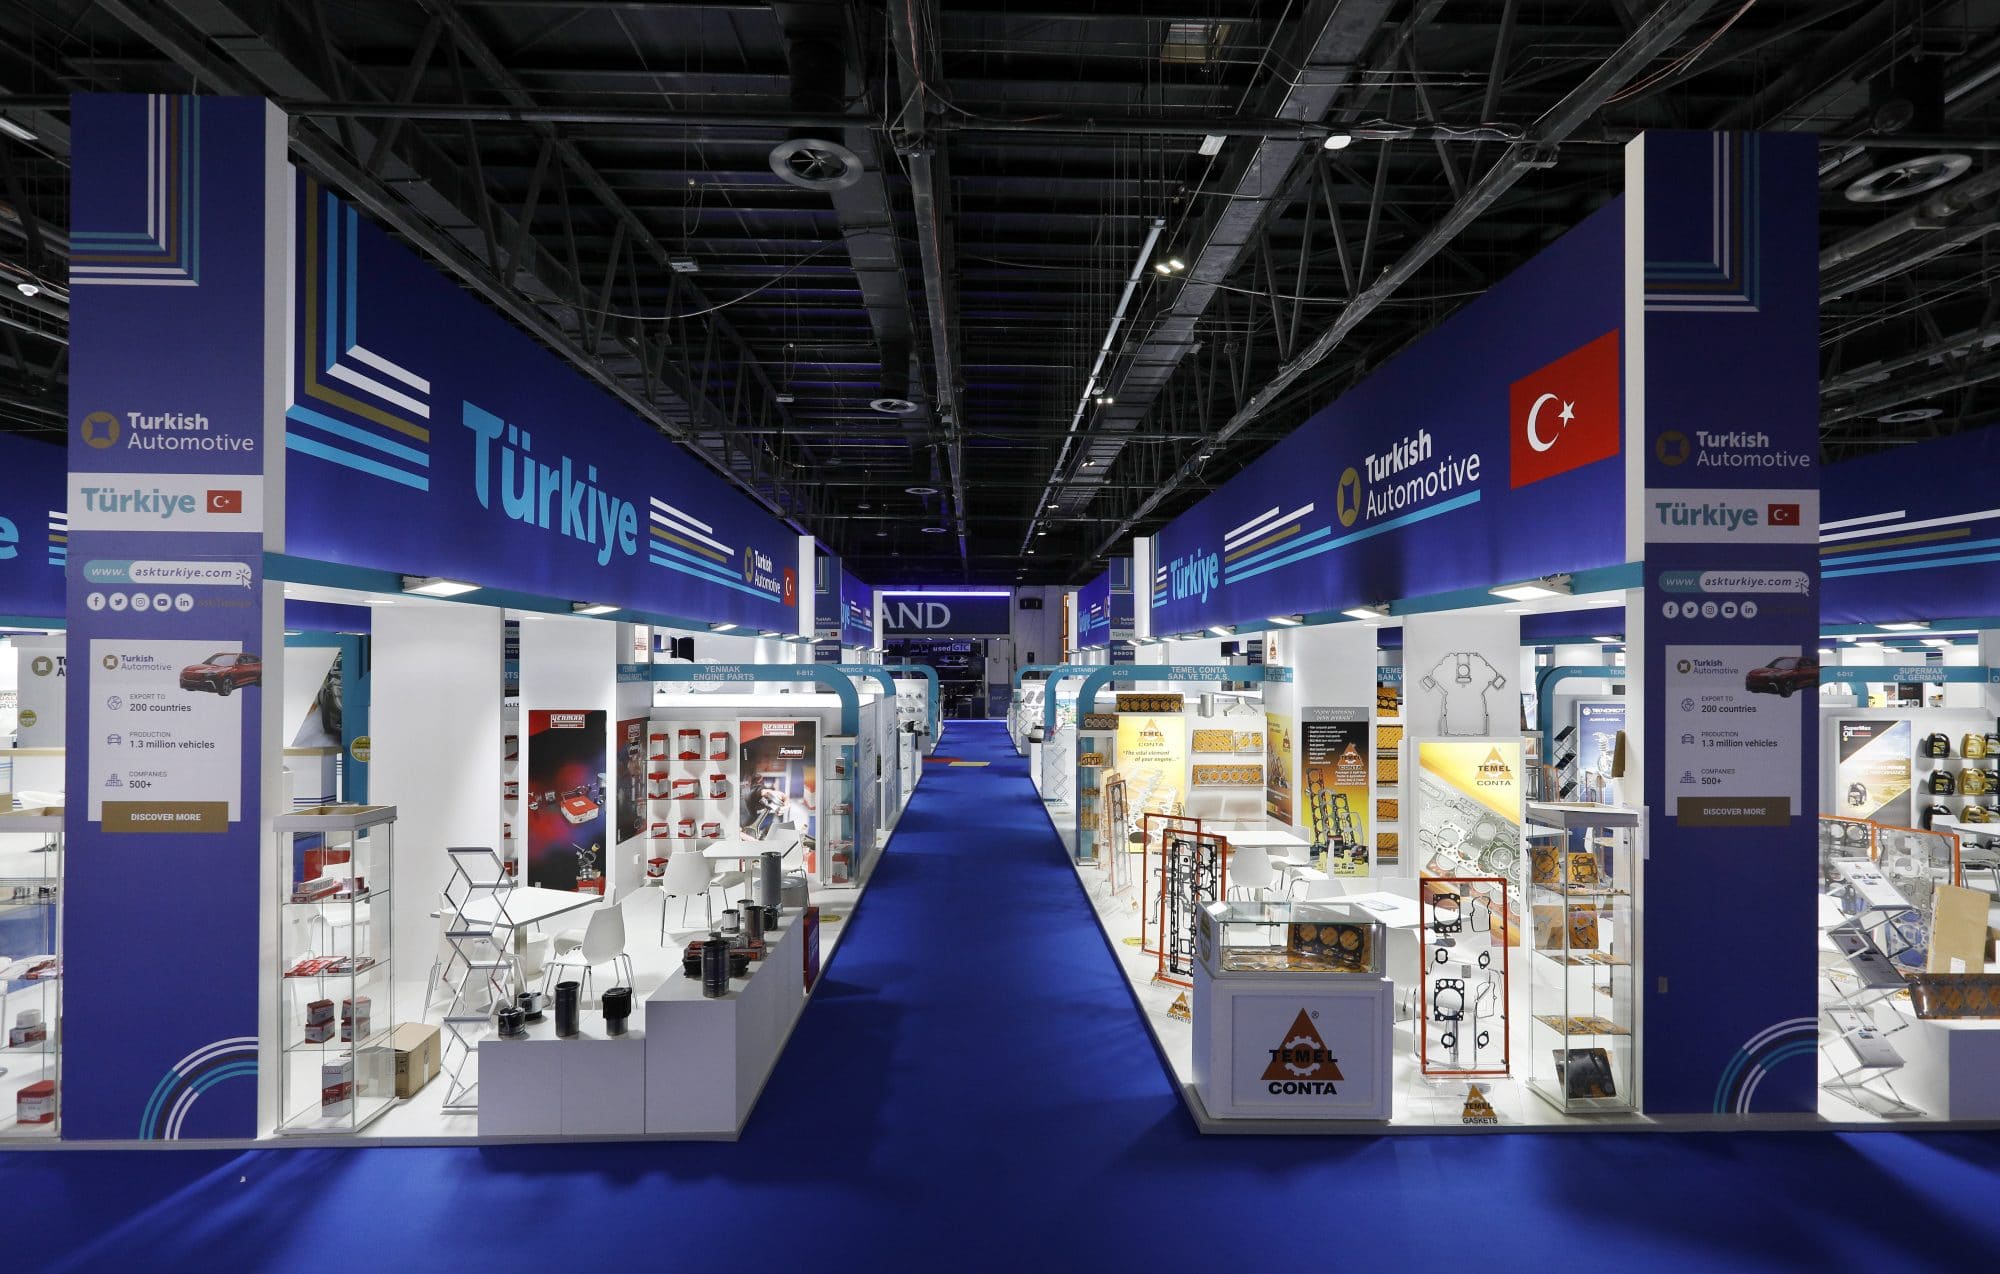 Turkey Pavilion @ Automechanika 2021, 1320 sqms